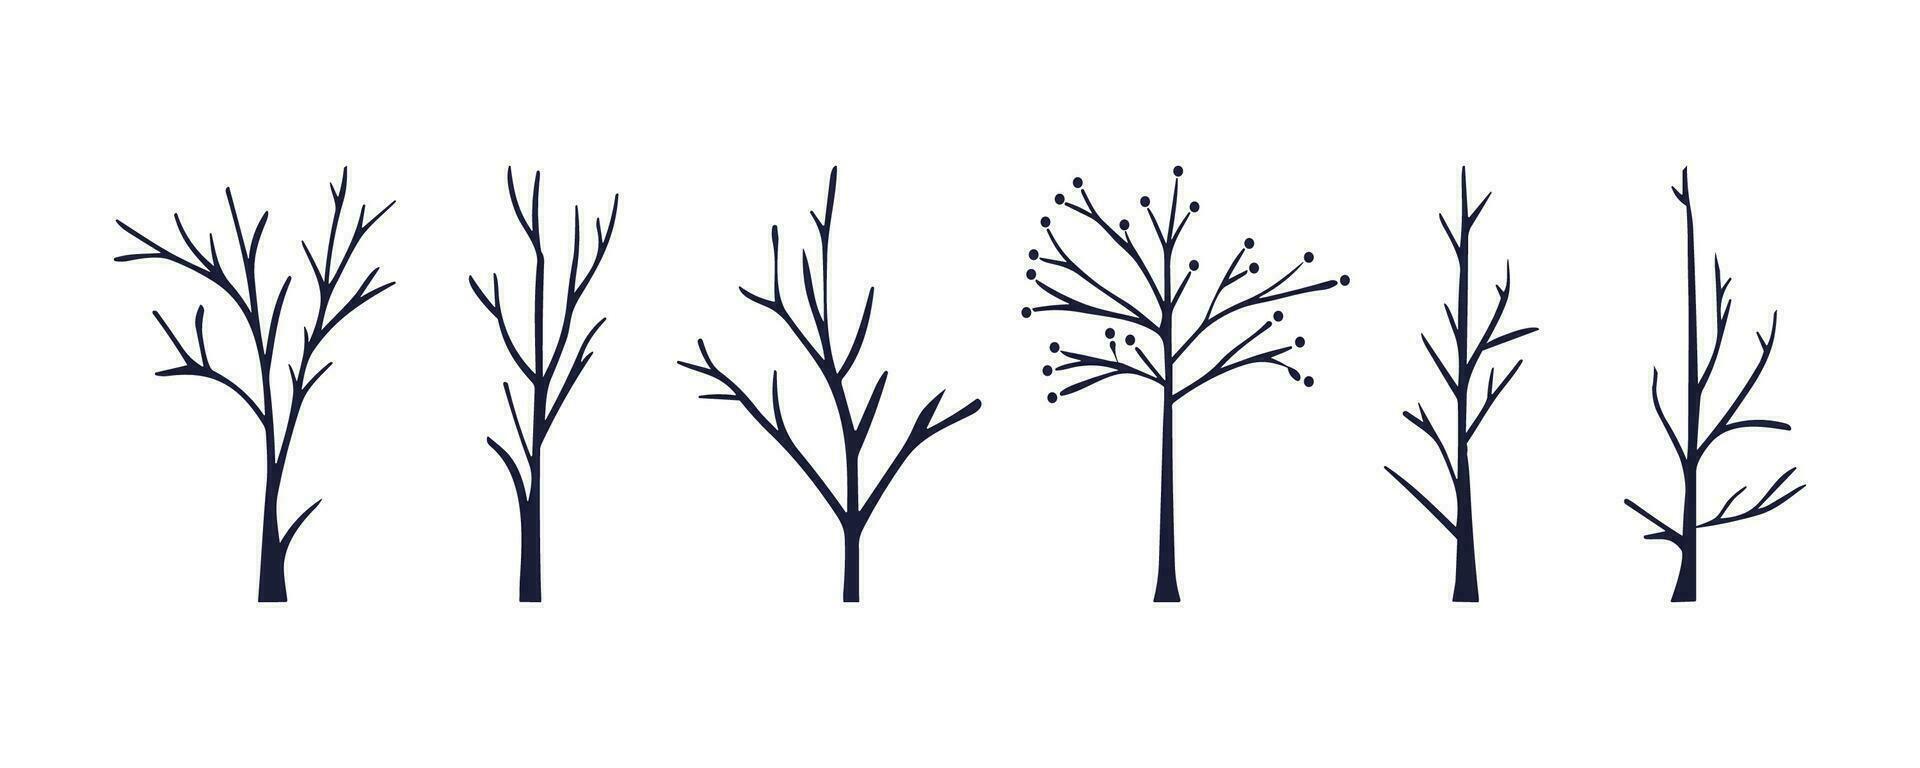 Winter Baum Ast Sammlung Illustration vektor